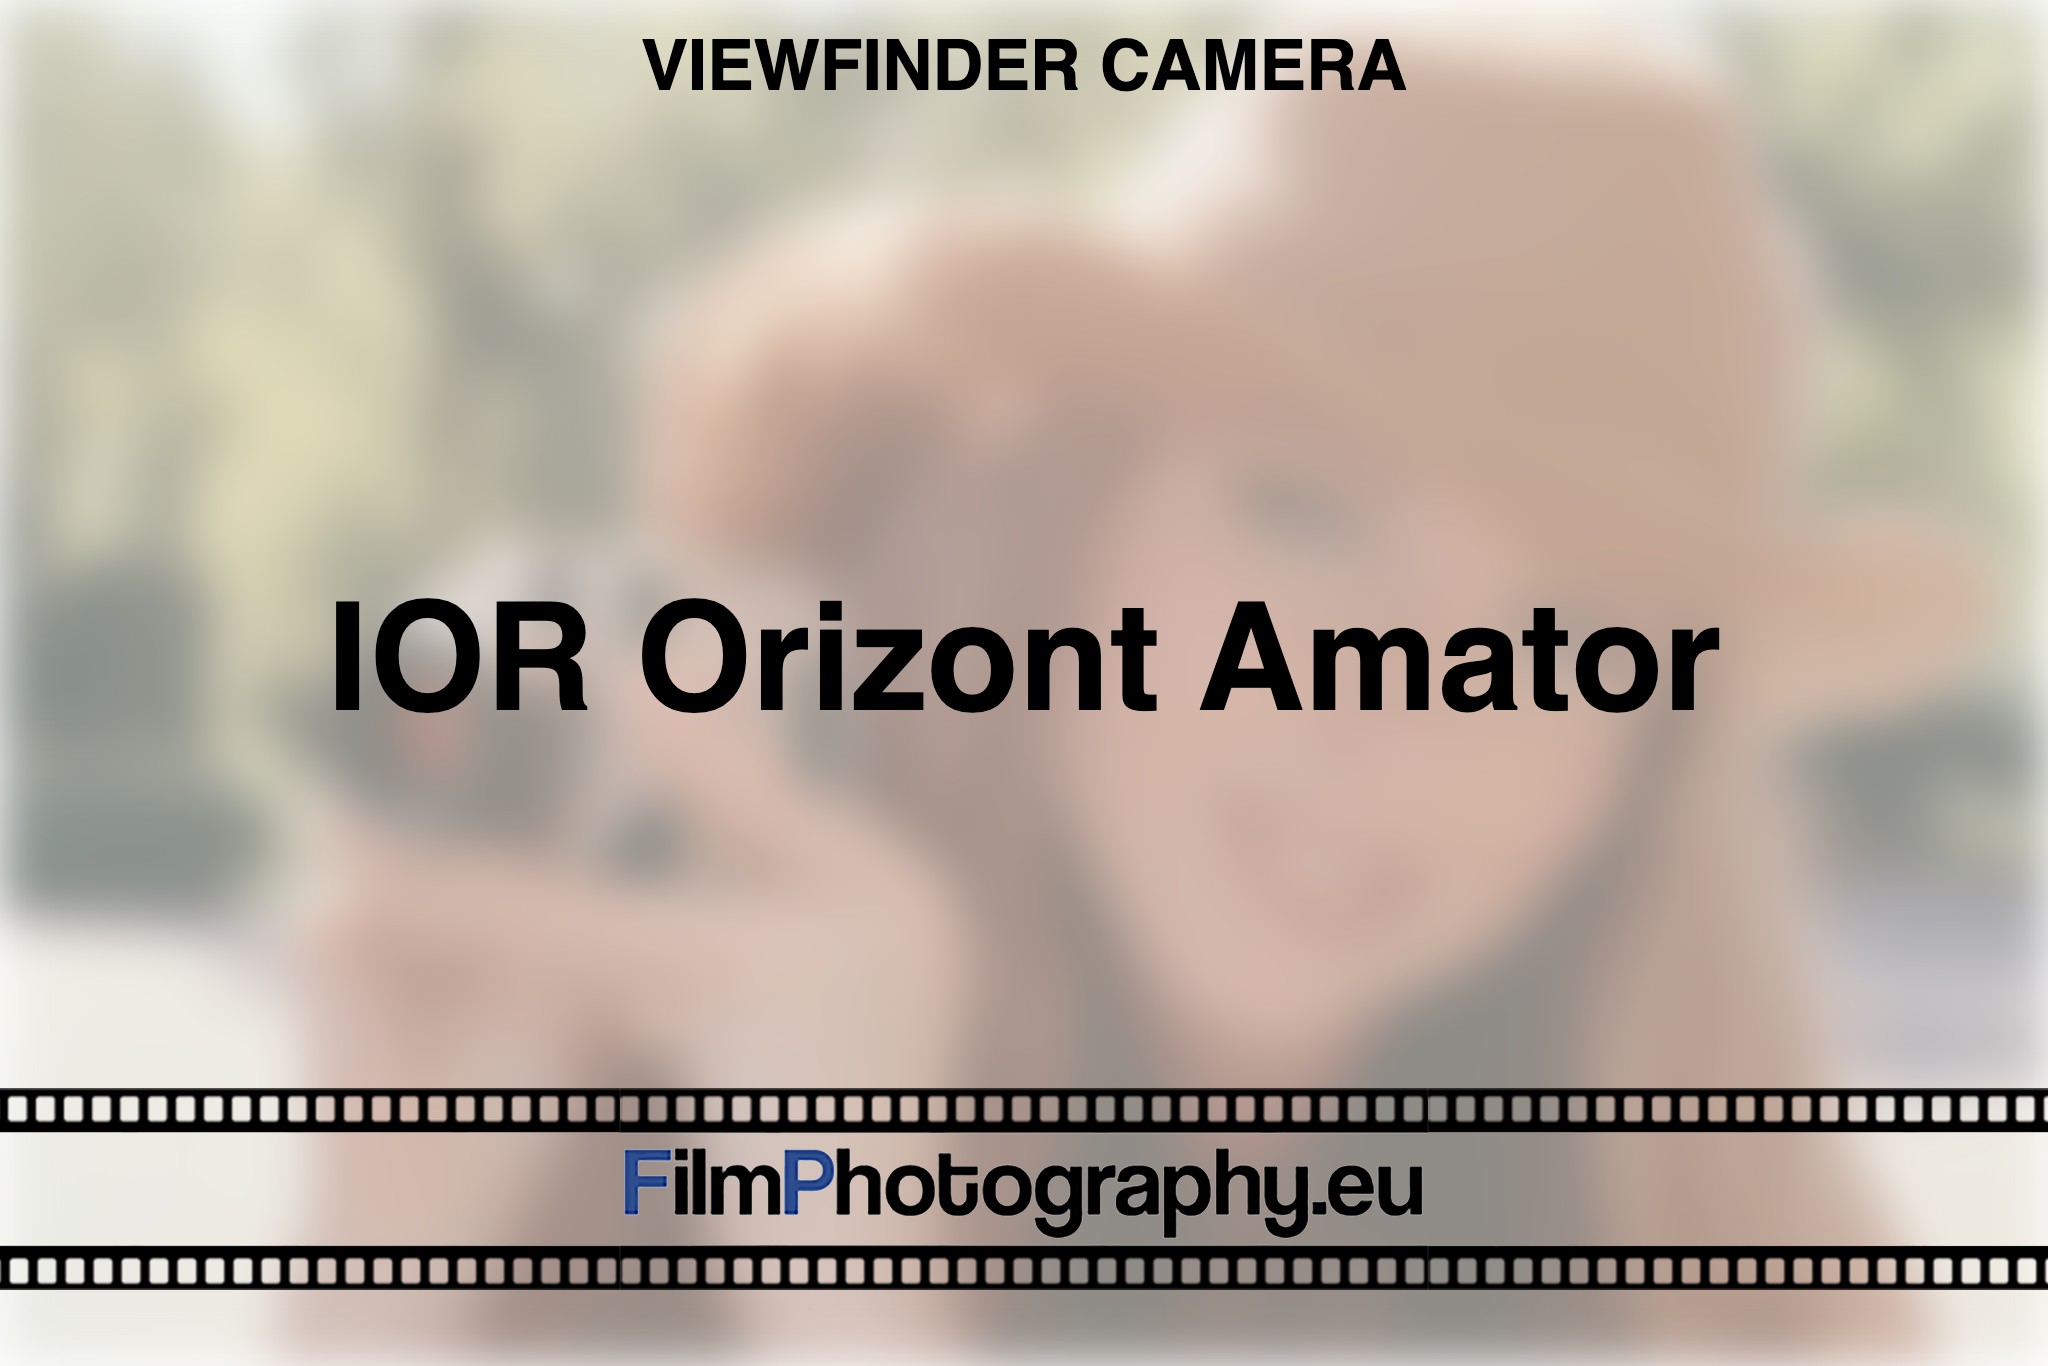 ior-orizont-amator-viewfinder-camera-bnv